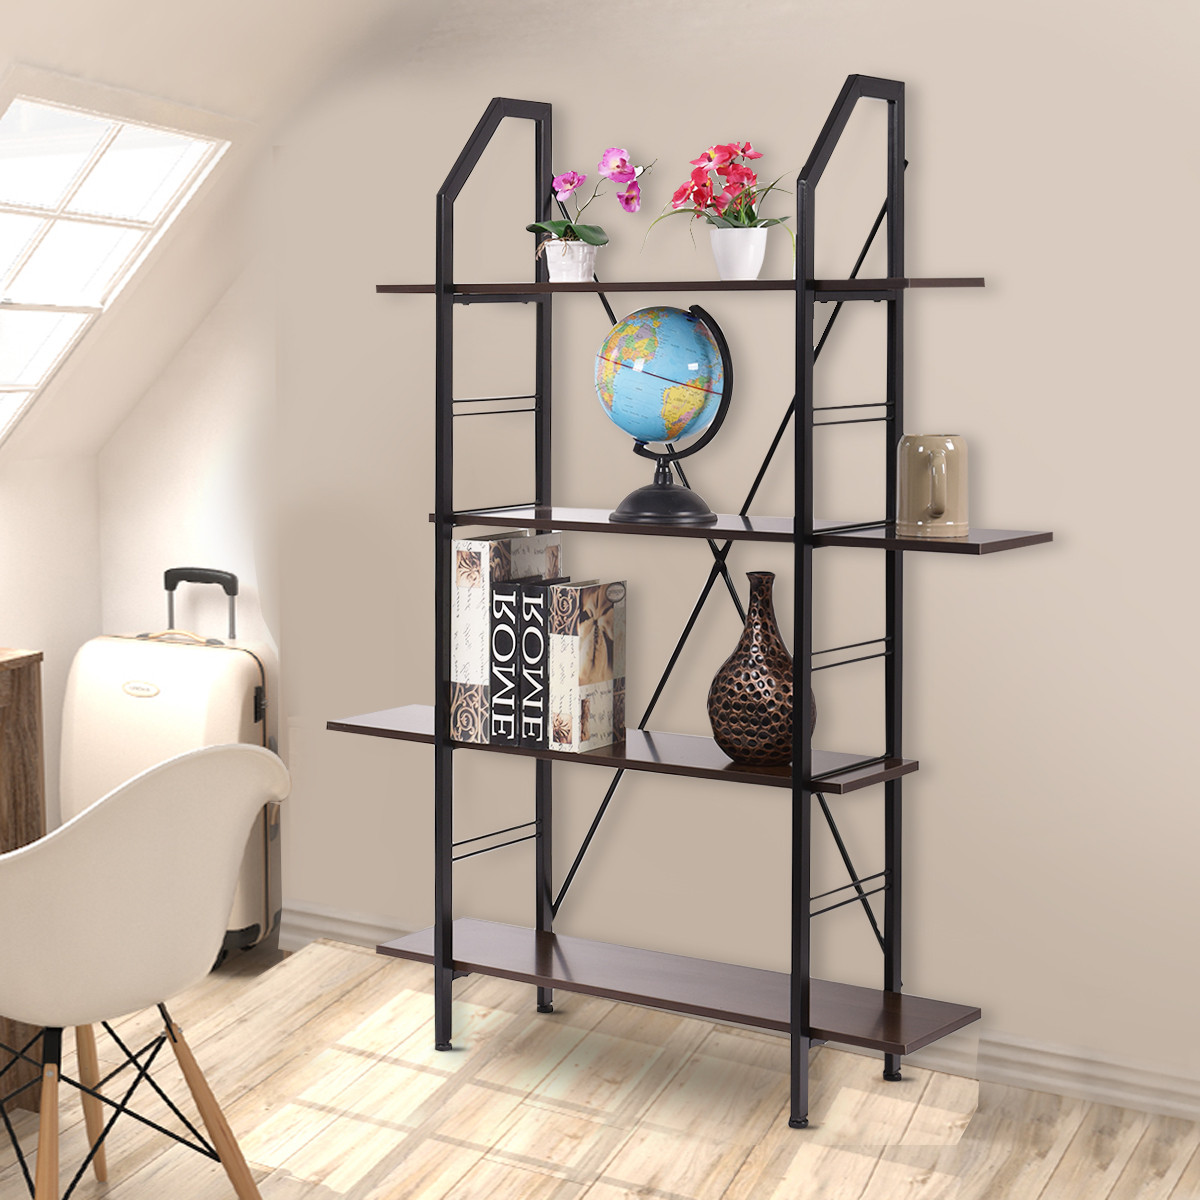 4 Layers Wooden Storage Bookshelf Home Office Furniture